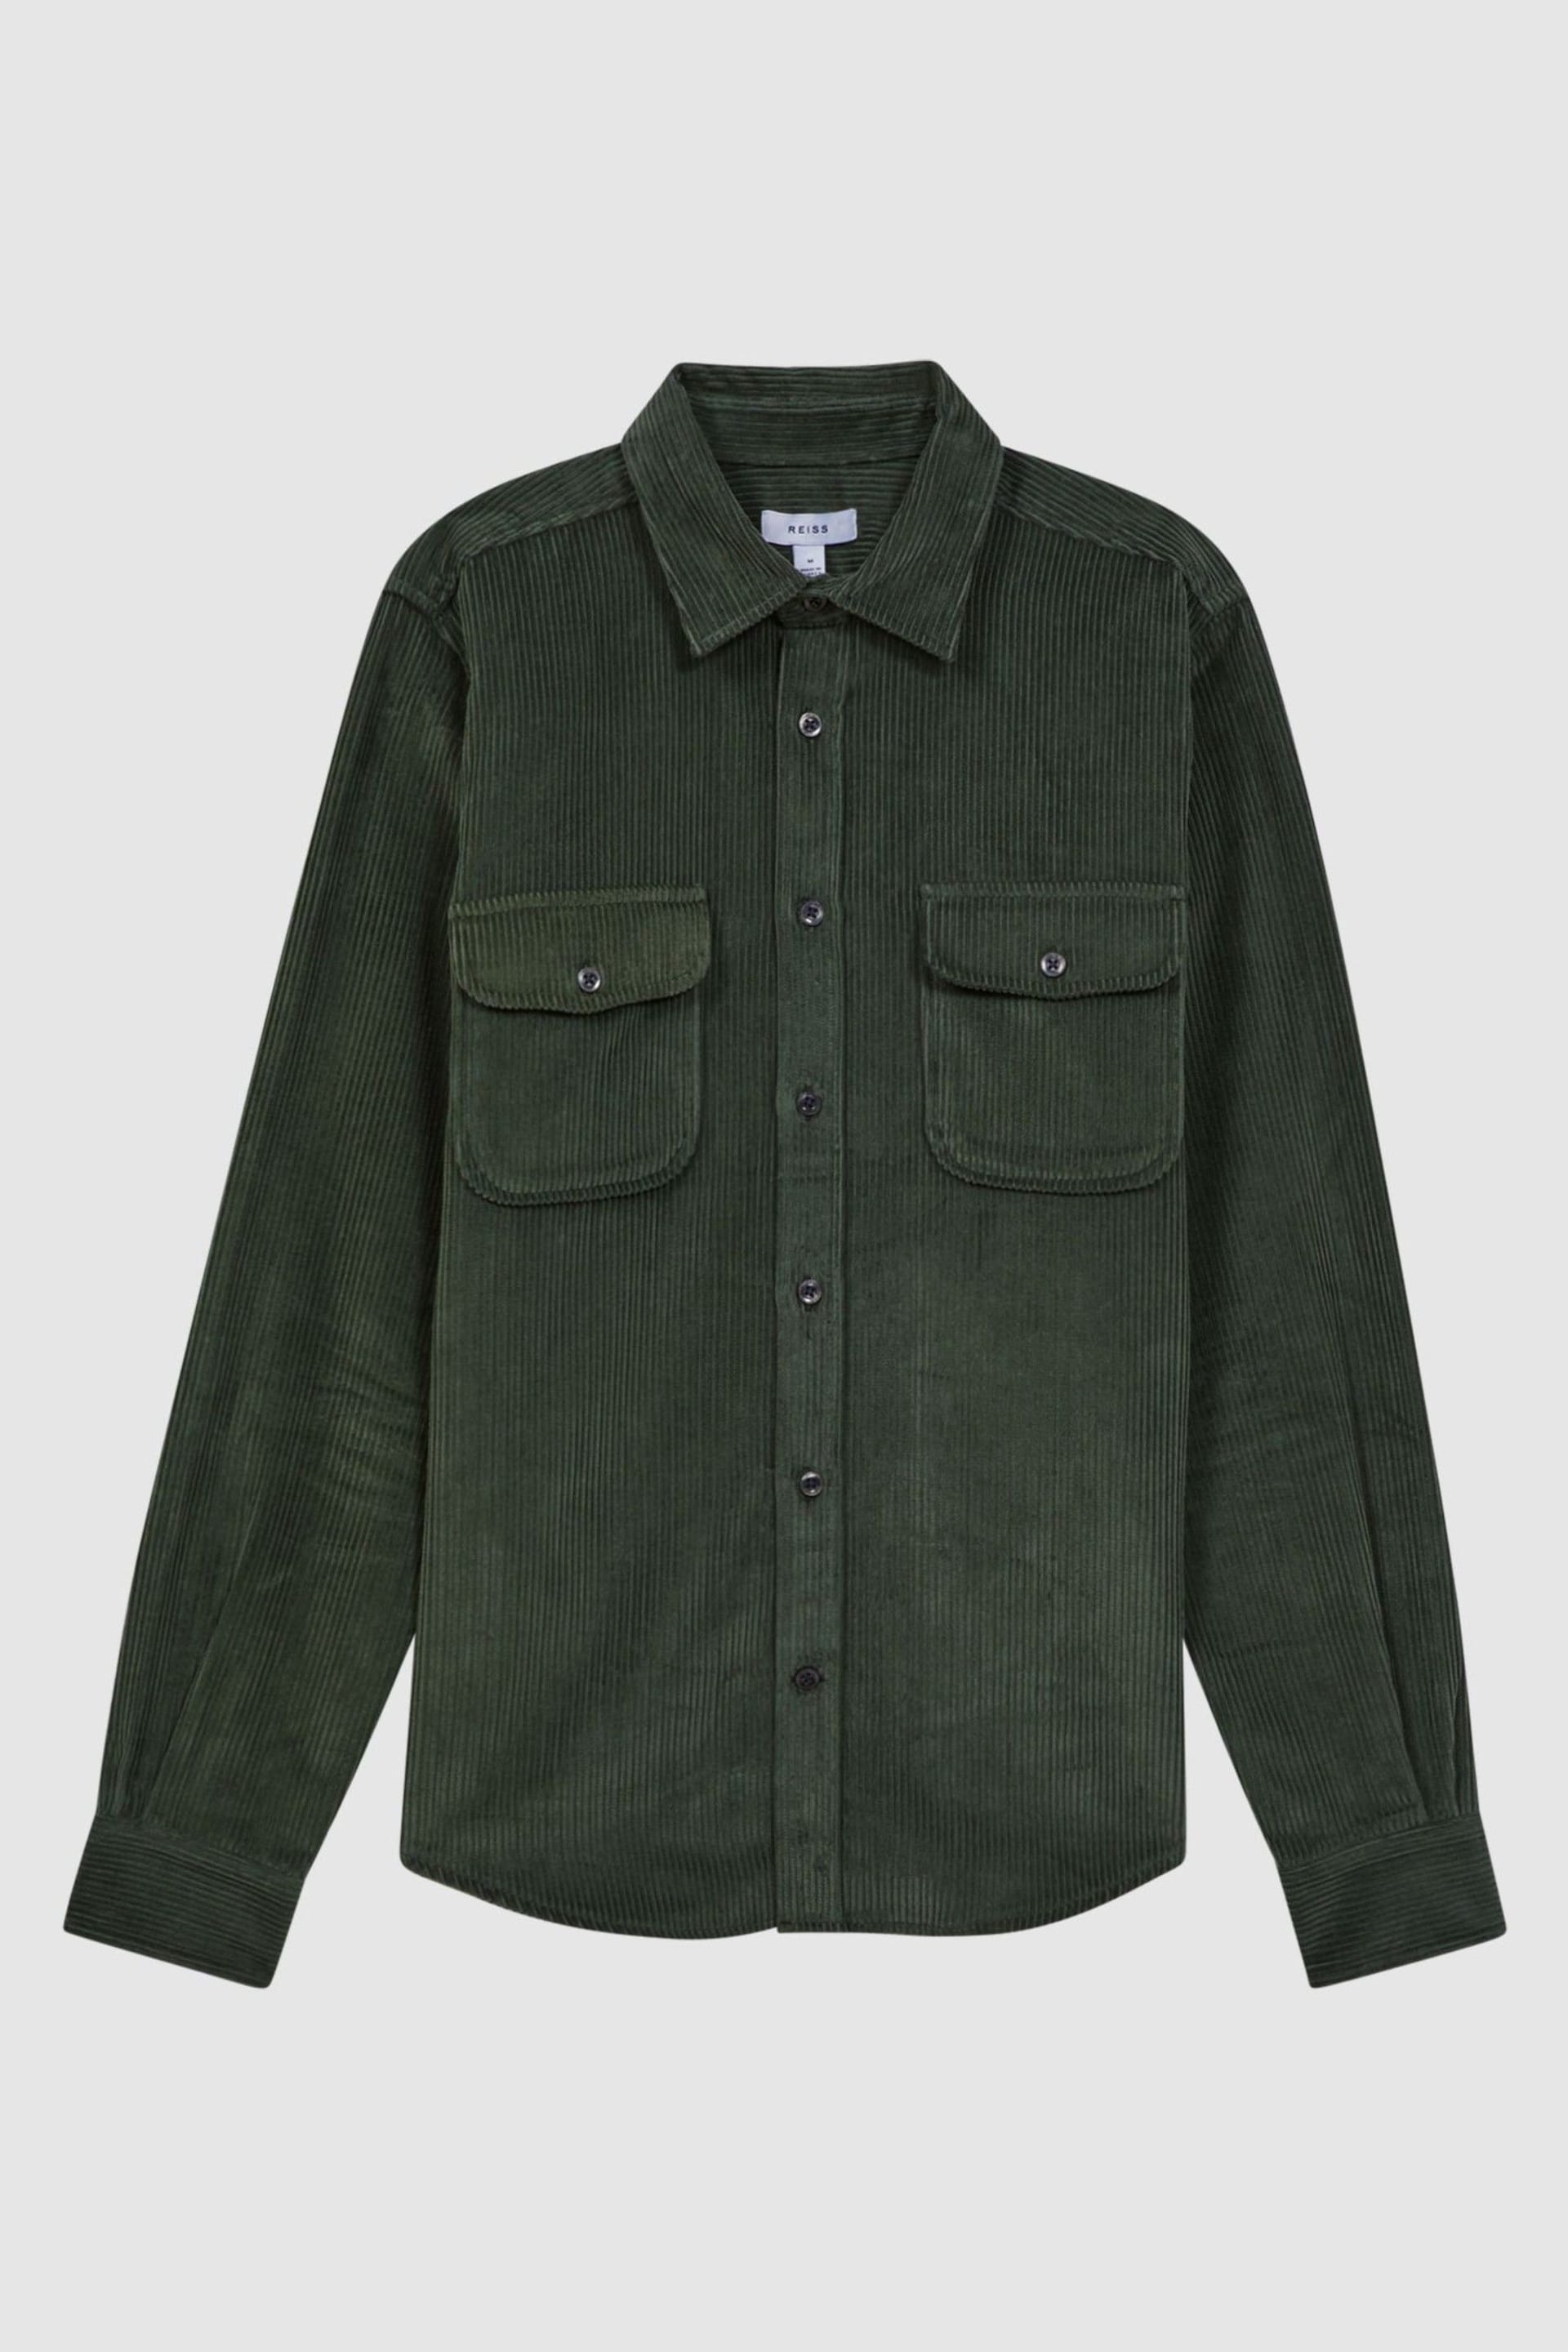 Reiss Ivy Green Bonucci Corduroy Twin Pocket Overshirt - Image 2 of 4